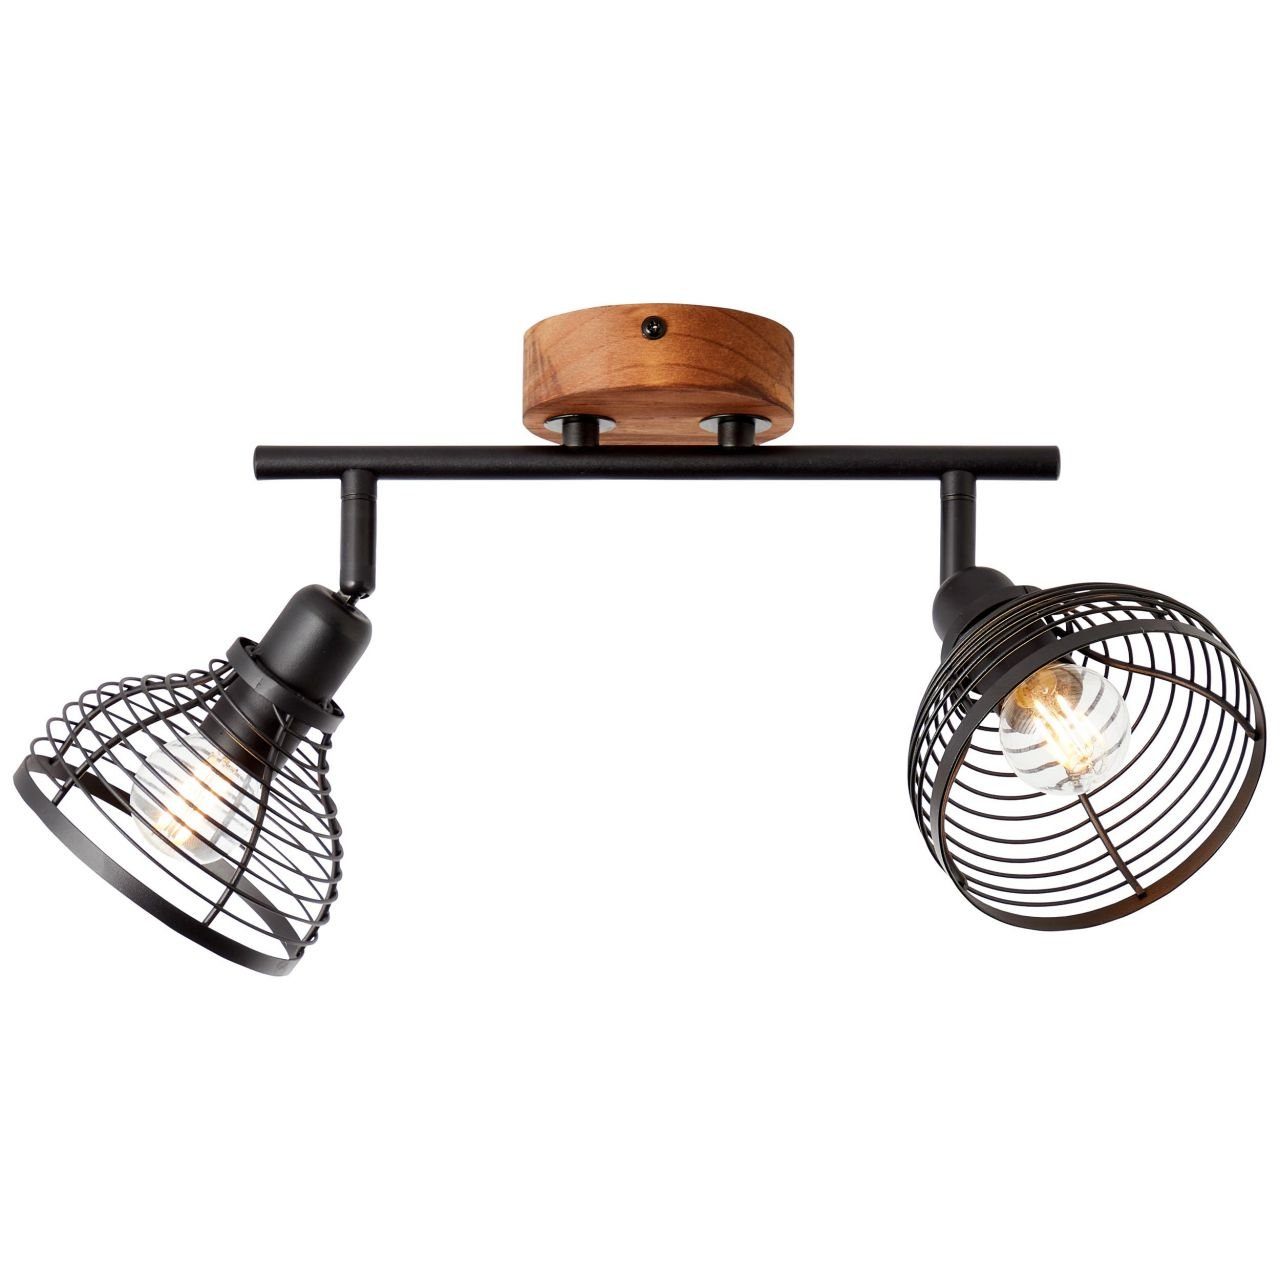 Avia, 2flg D45, 2x schwarz/holzfarbend, E1 Deckenleuchte Lampe, Metall/Holz, Avia Spotrohr Brilliant